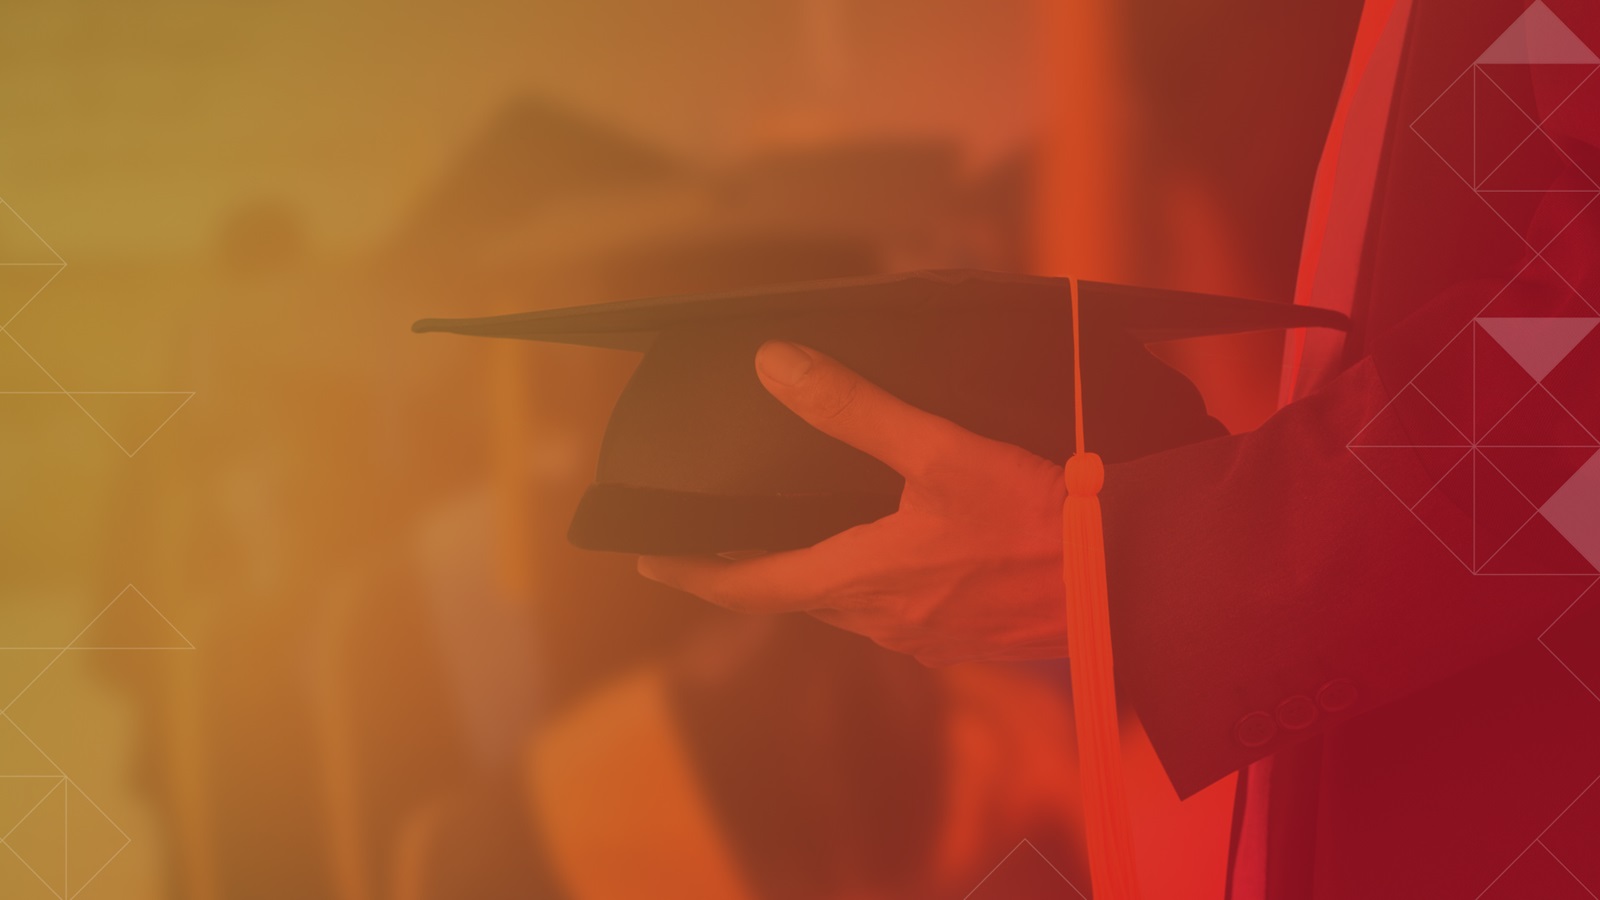 Website header image, graduate holding cap photo, Virtual Graduation Experience 2022 